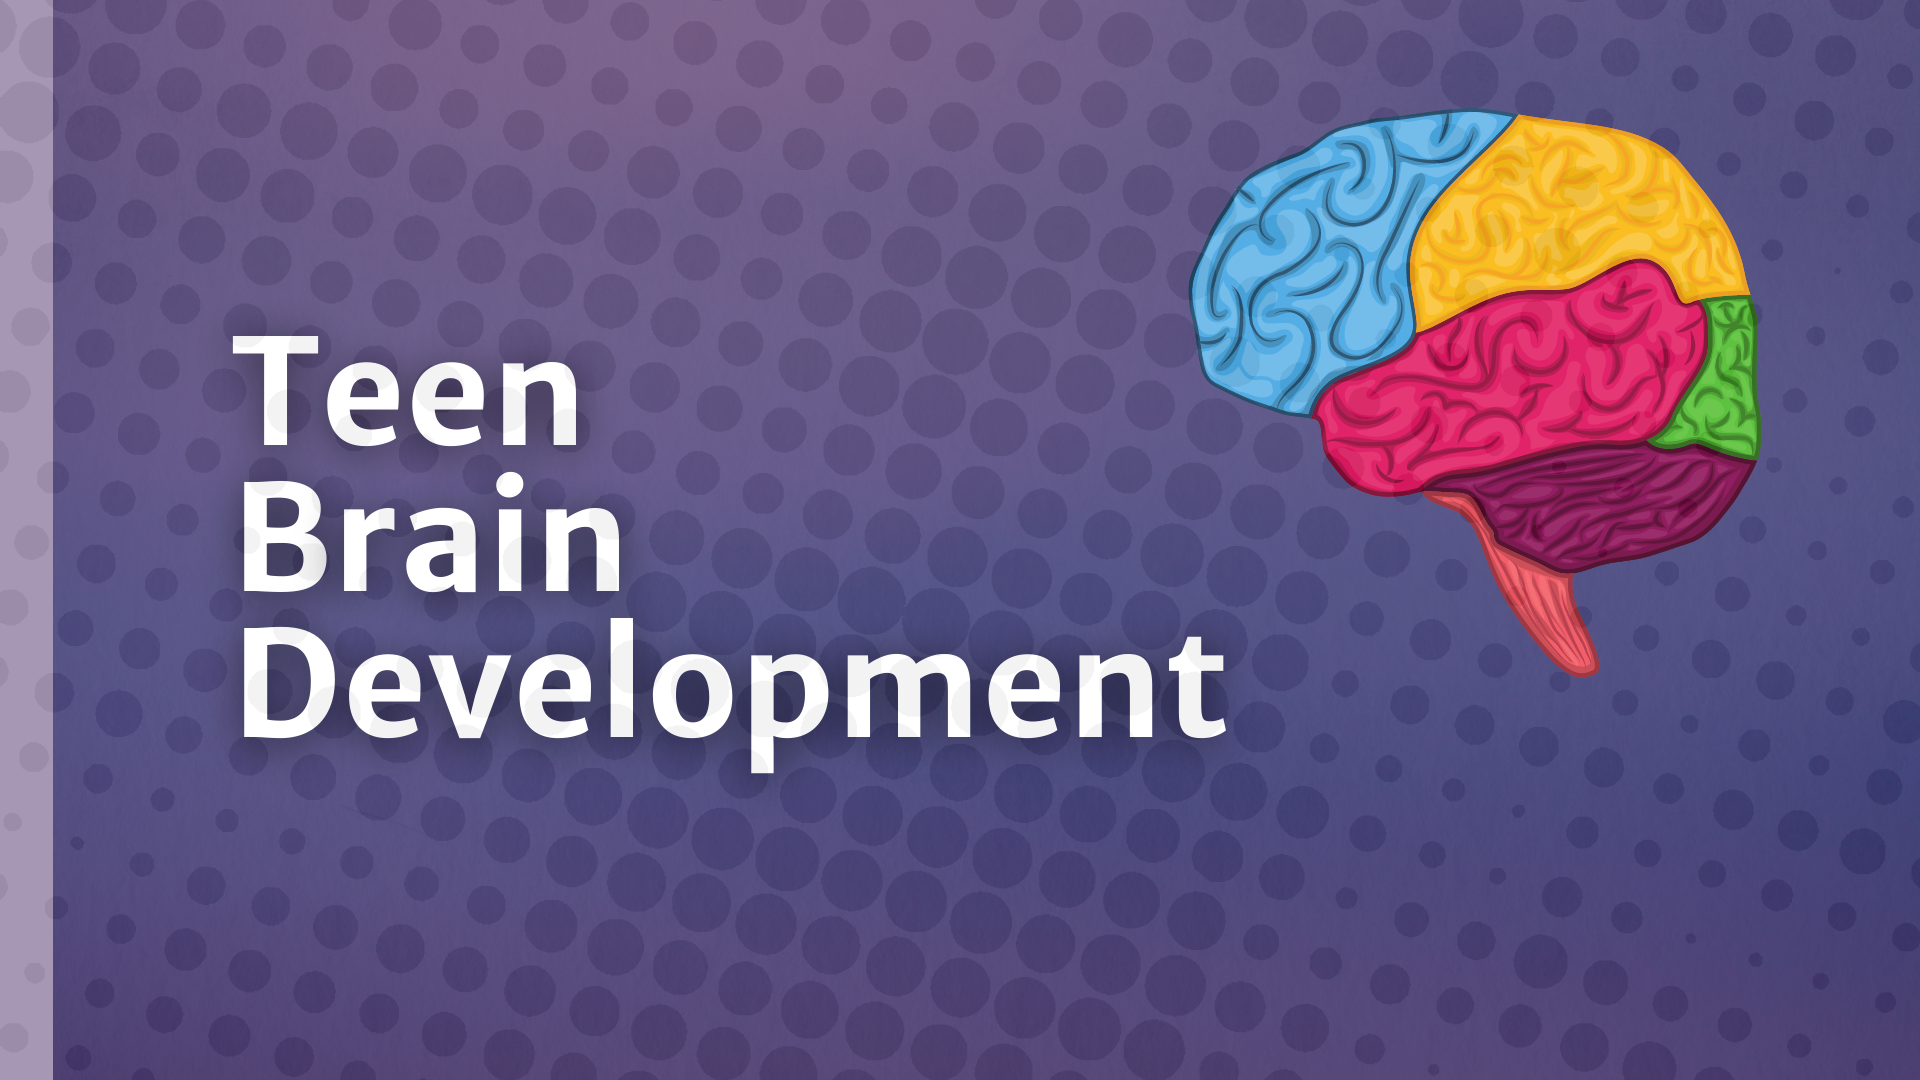 Developing the Teen Brain